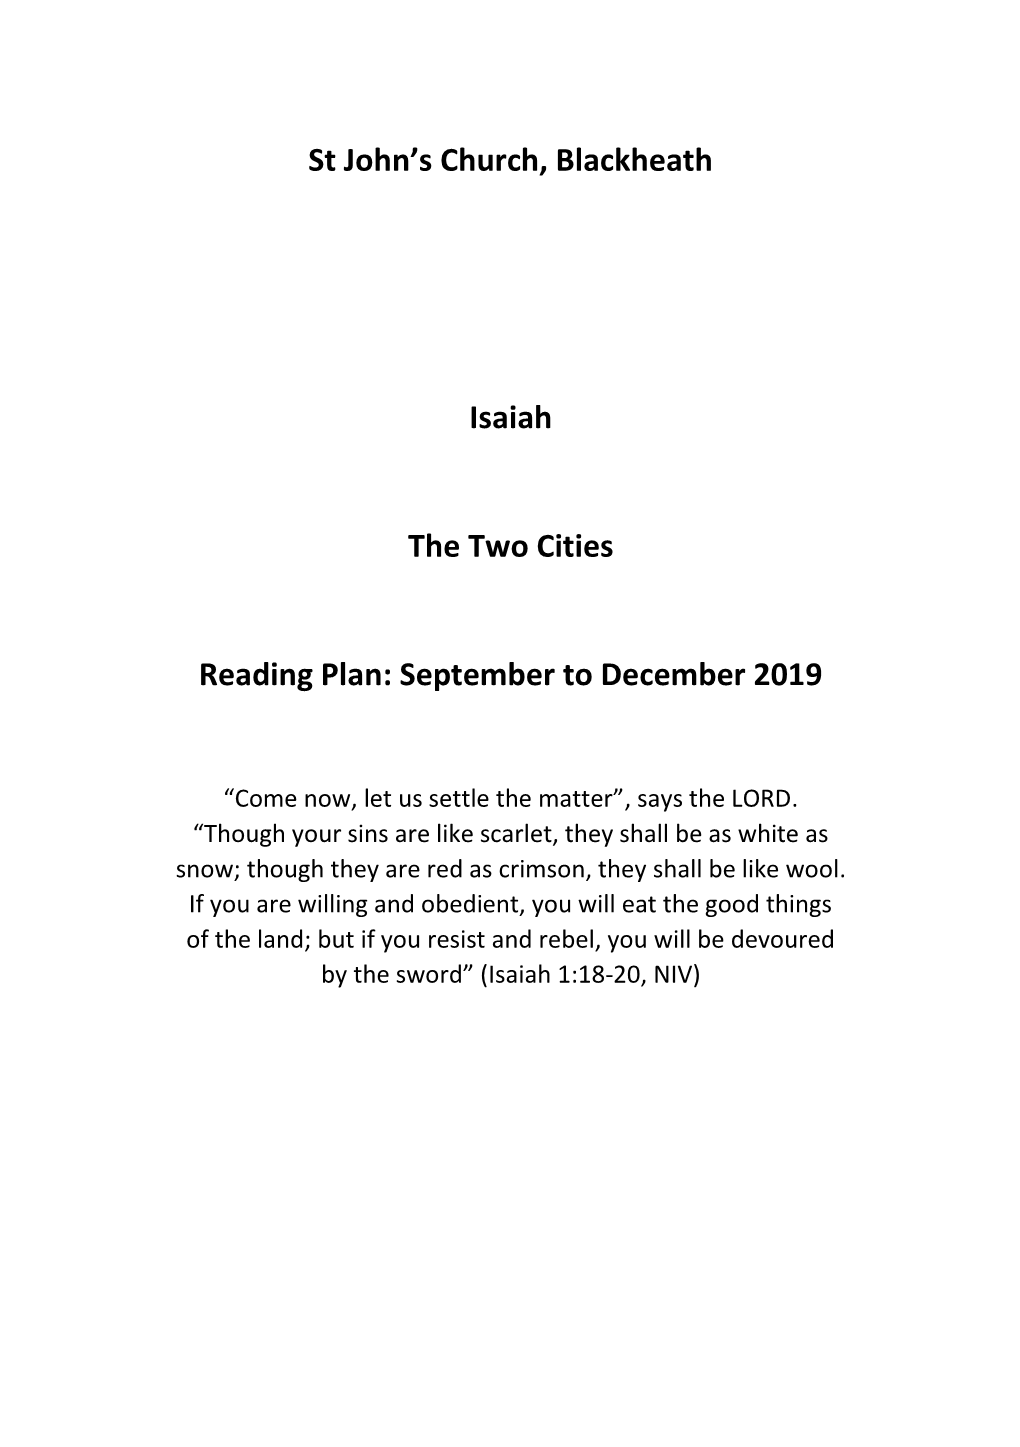 St John's Church, Blackheath Isaiah the Two Cities Reading Plan